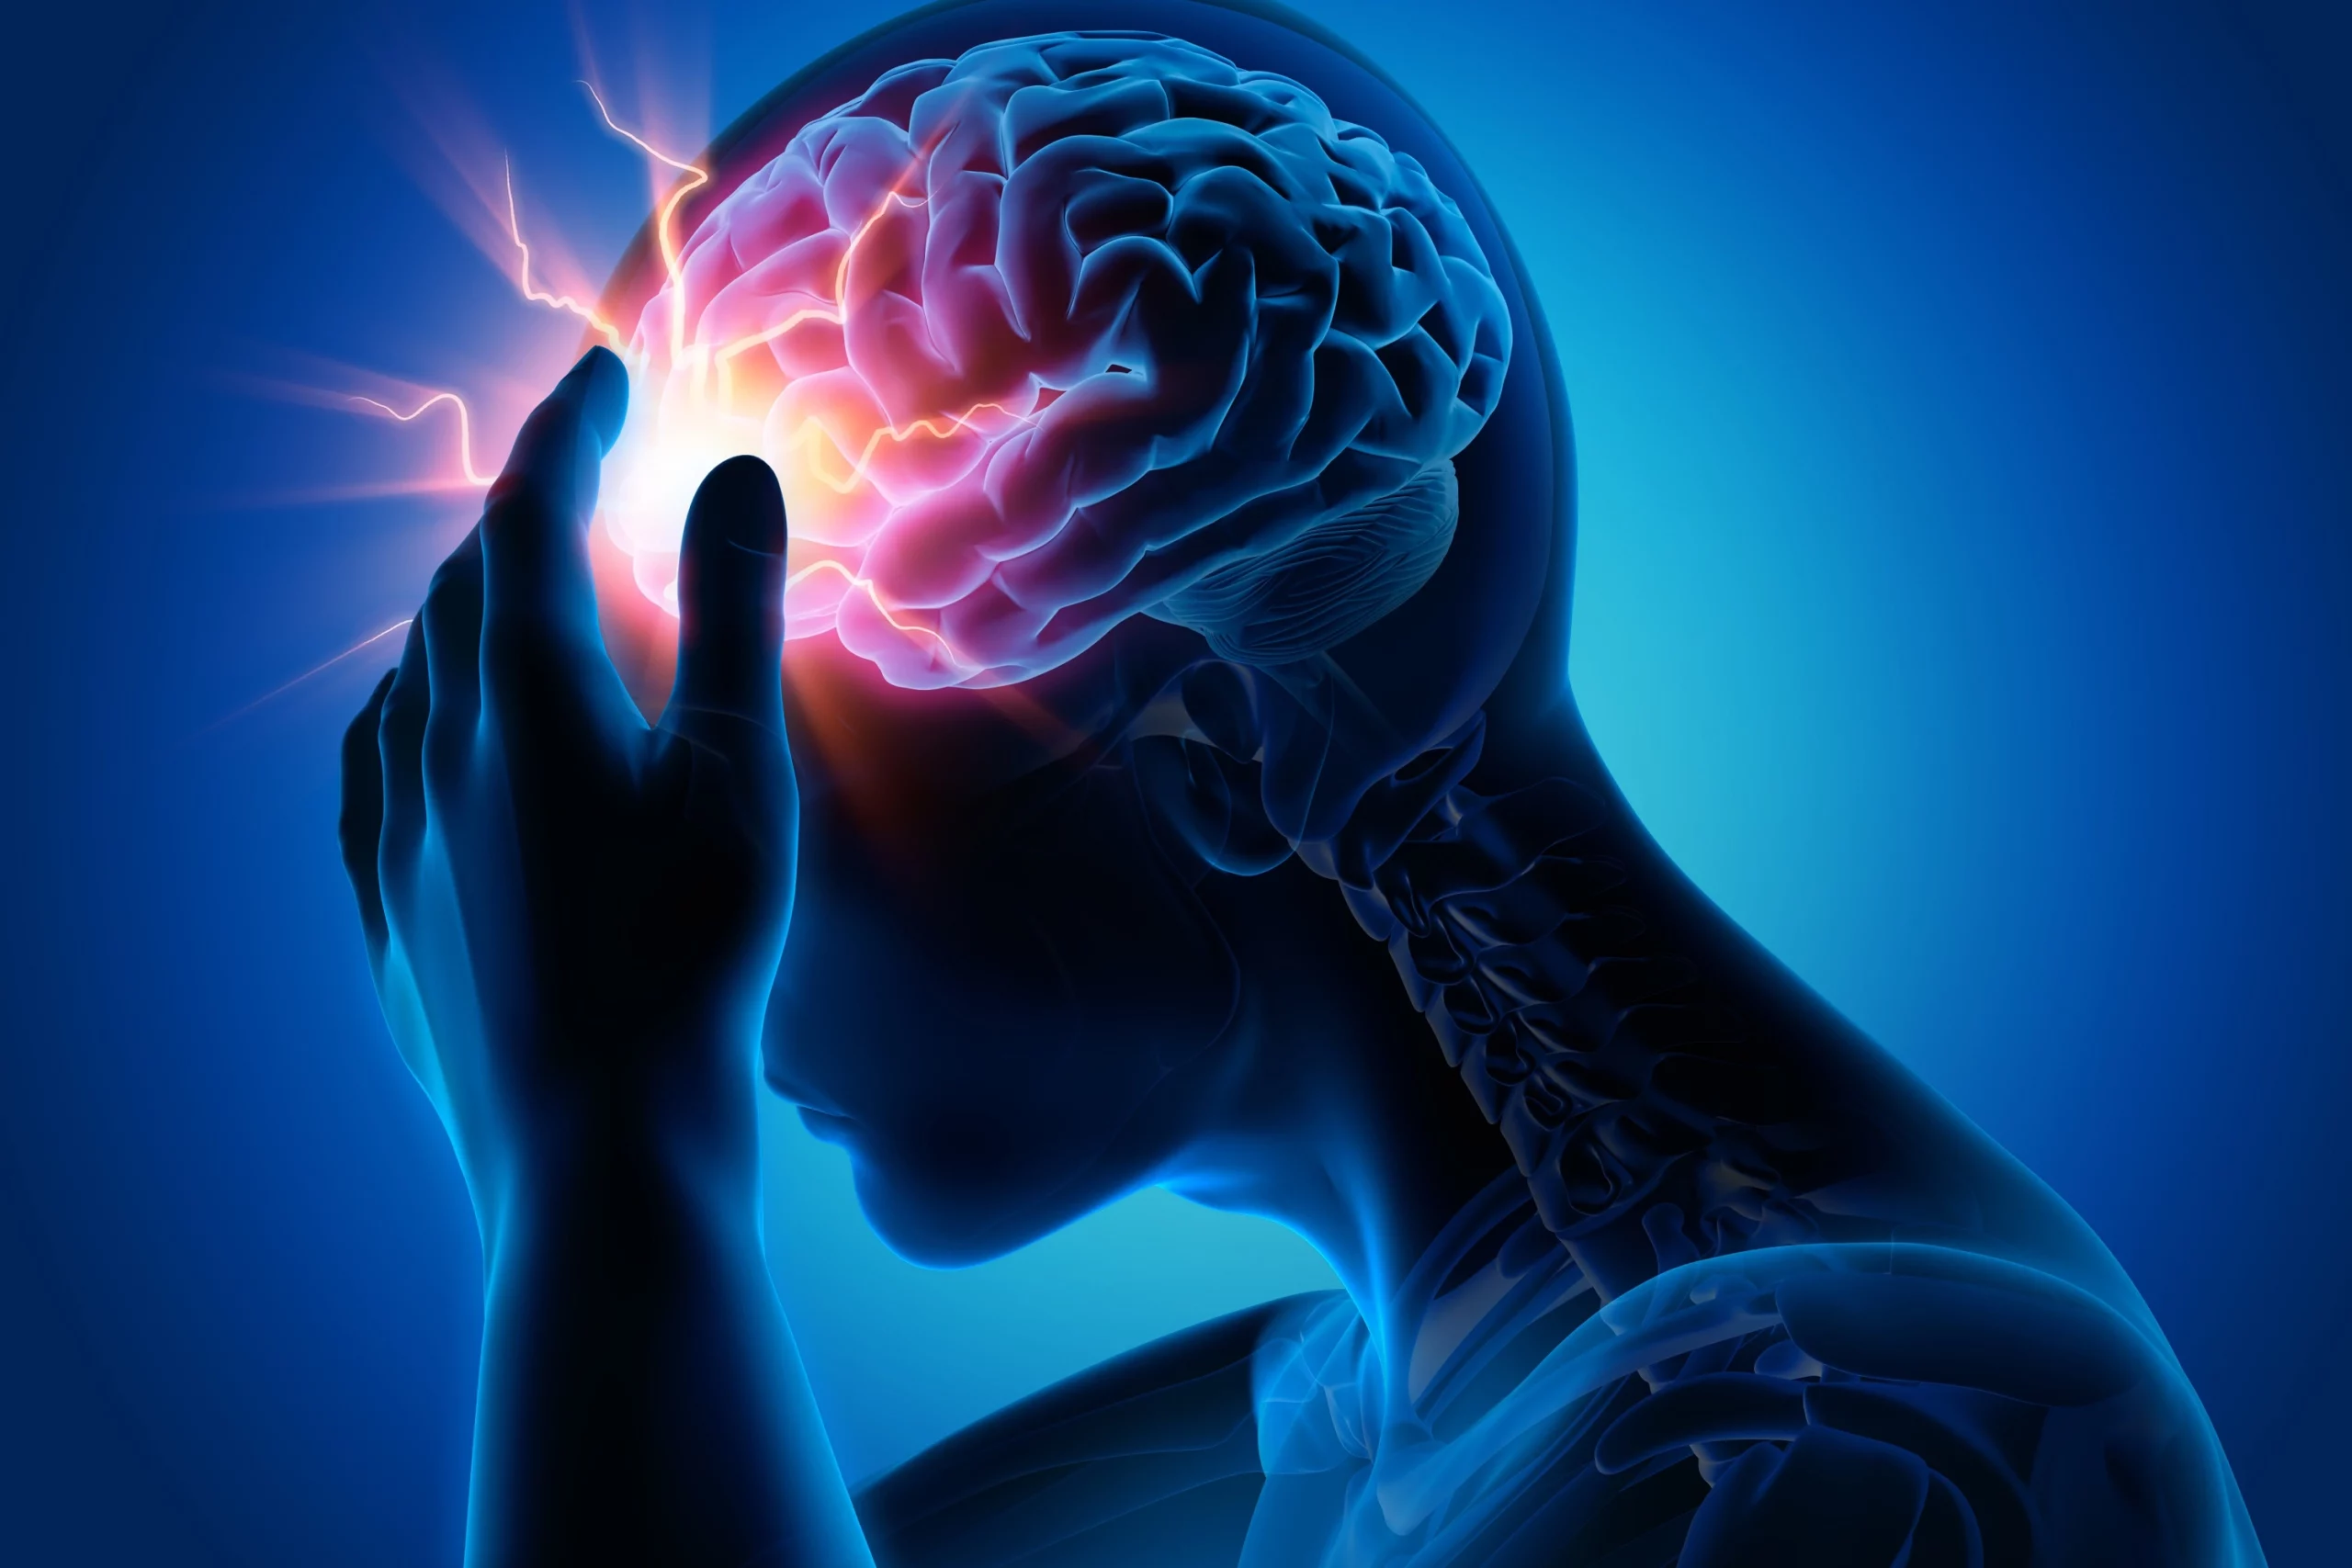 Image related to Traumatic Brain Injury (TBI) Awareness Month